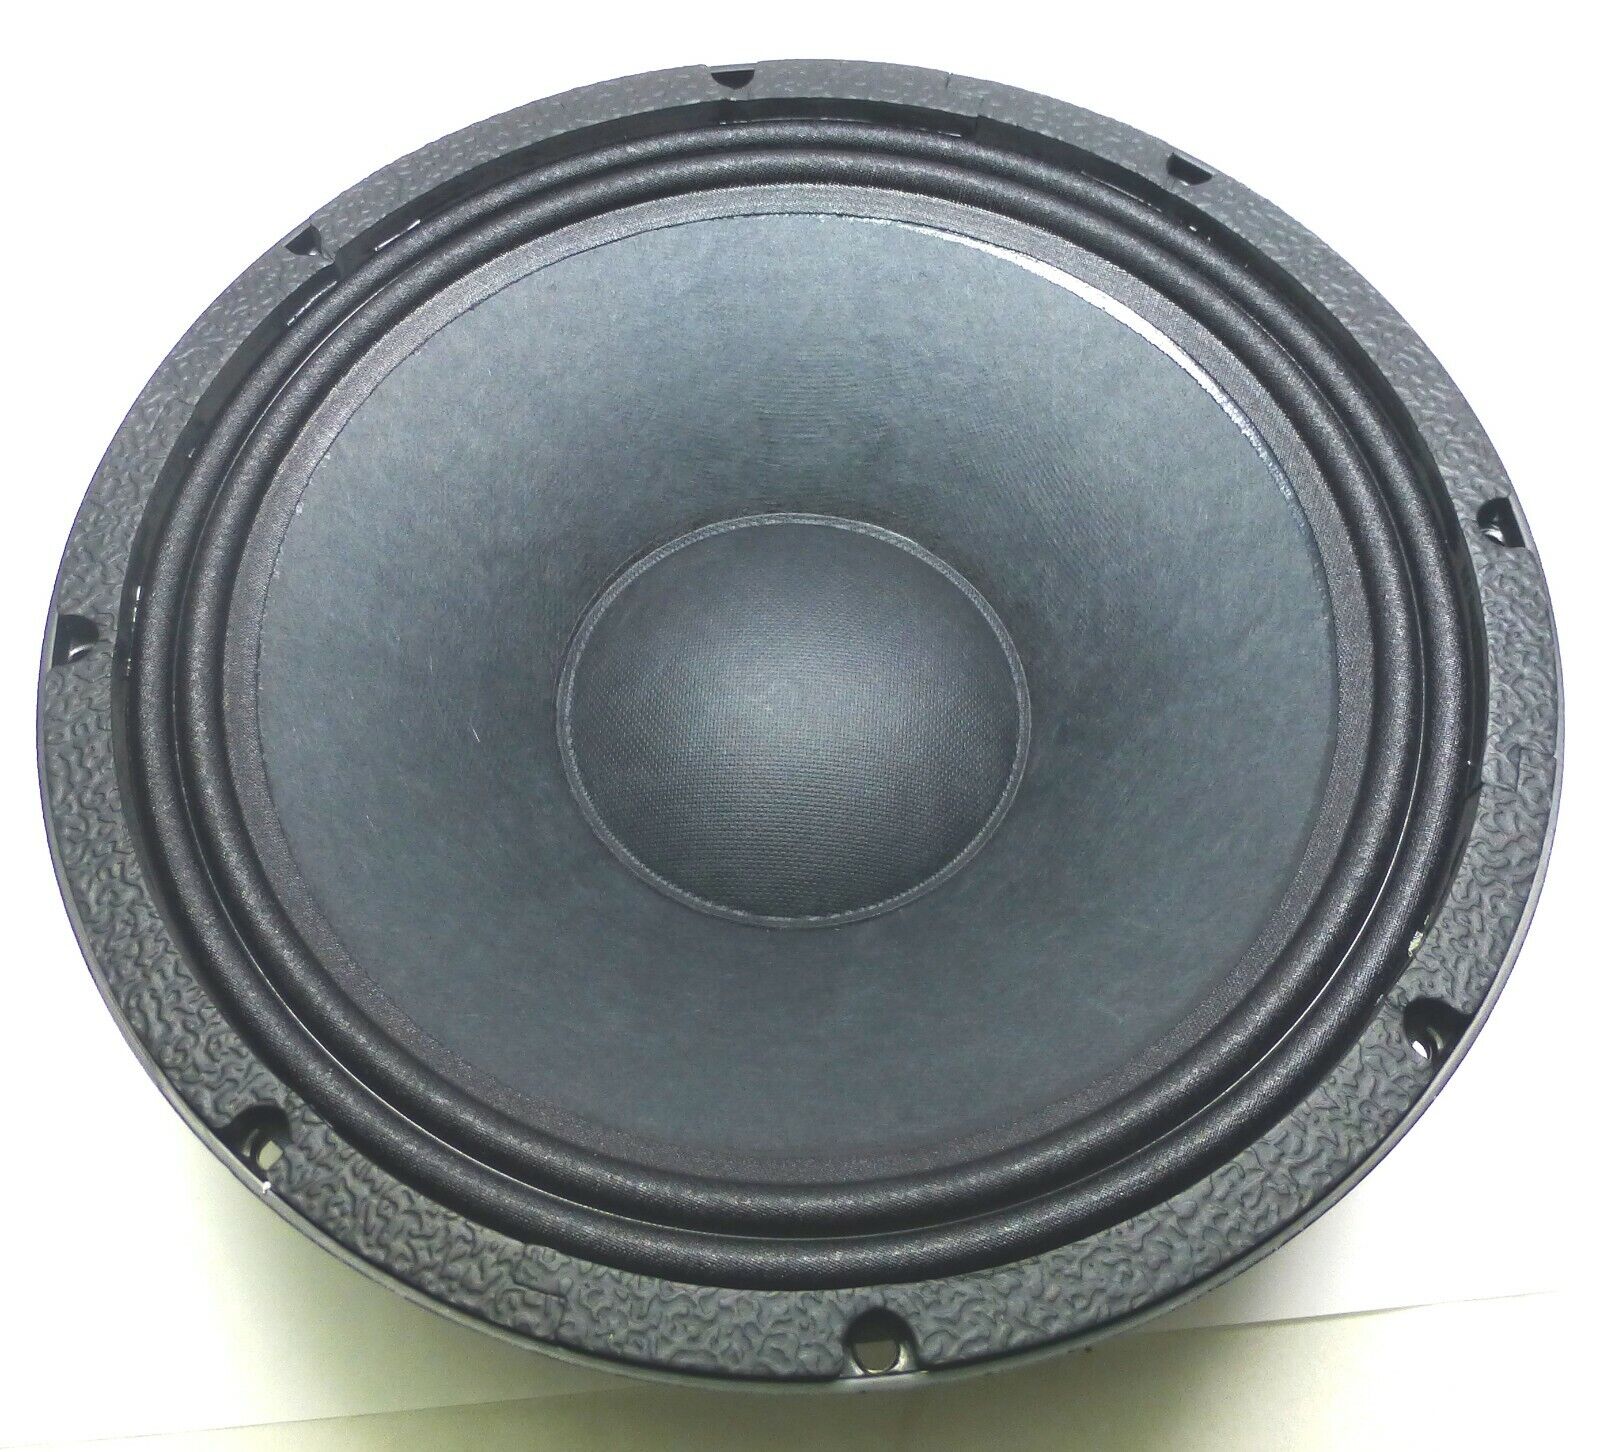 LASE 12LM-1000 12" Bass/Mid-Bass Speaker